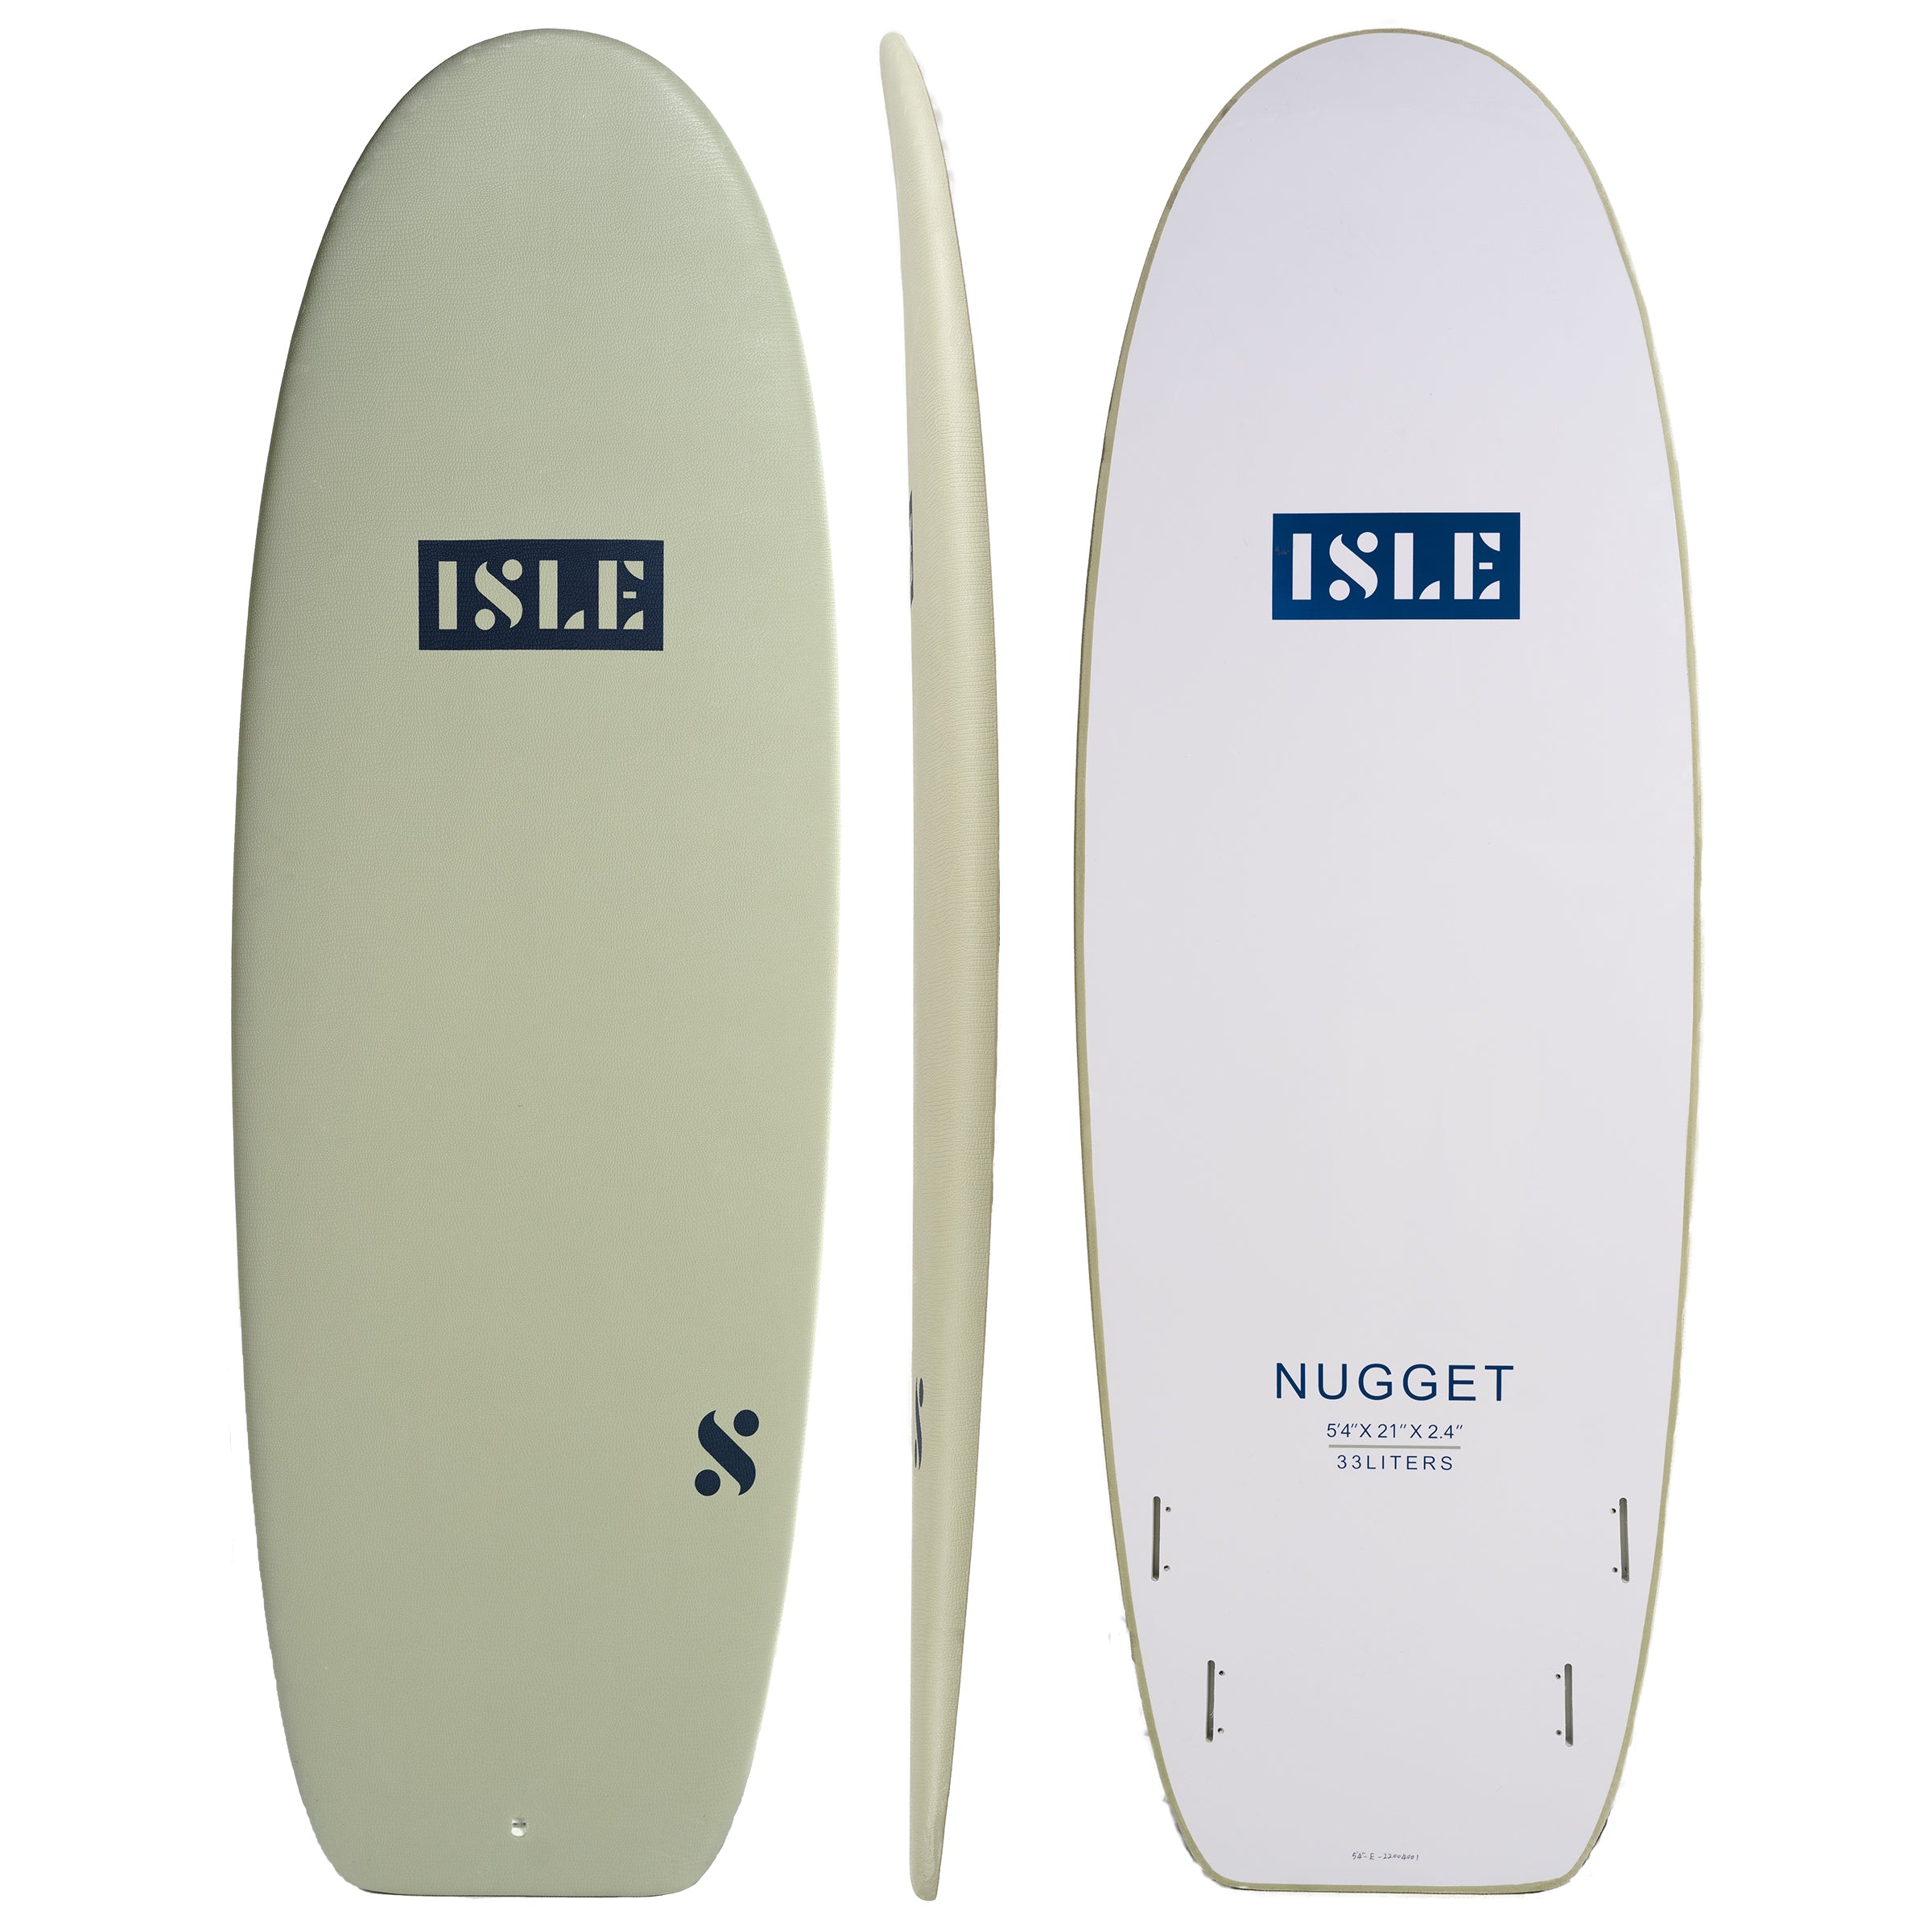 Nugget Soft Top Surfboard in Seafoam